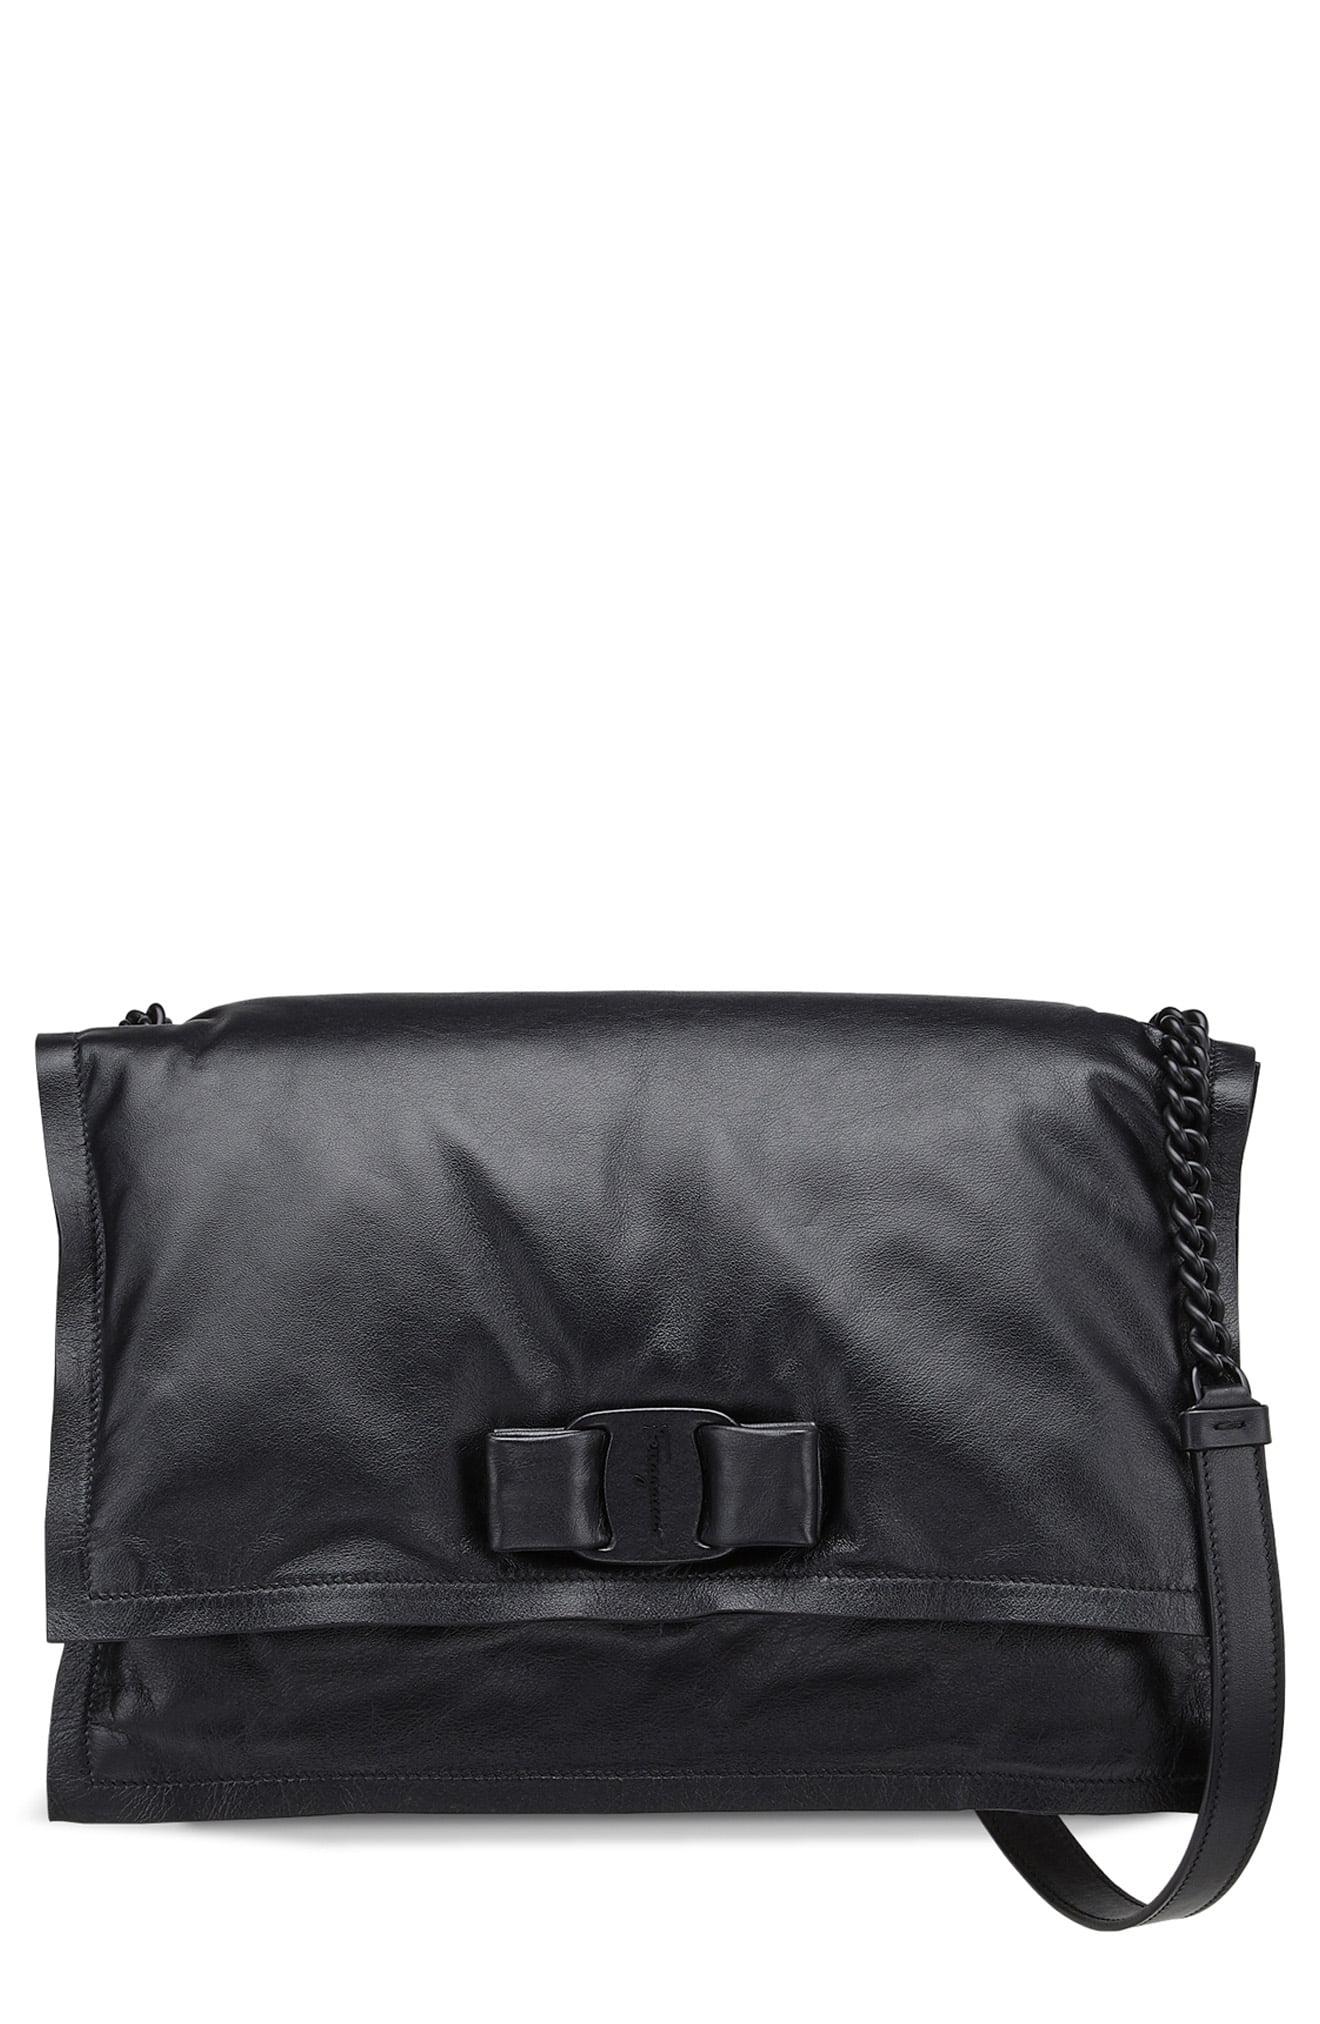 Ferragamo Viva Puffy Calfskin Leather Shoulder Bag in Black | Lyst